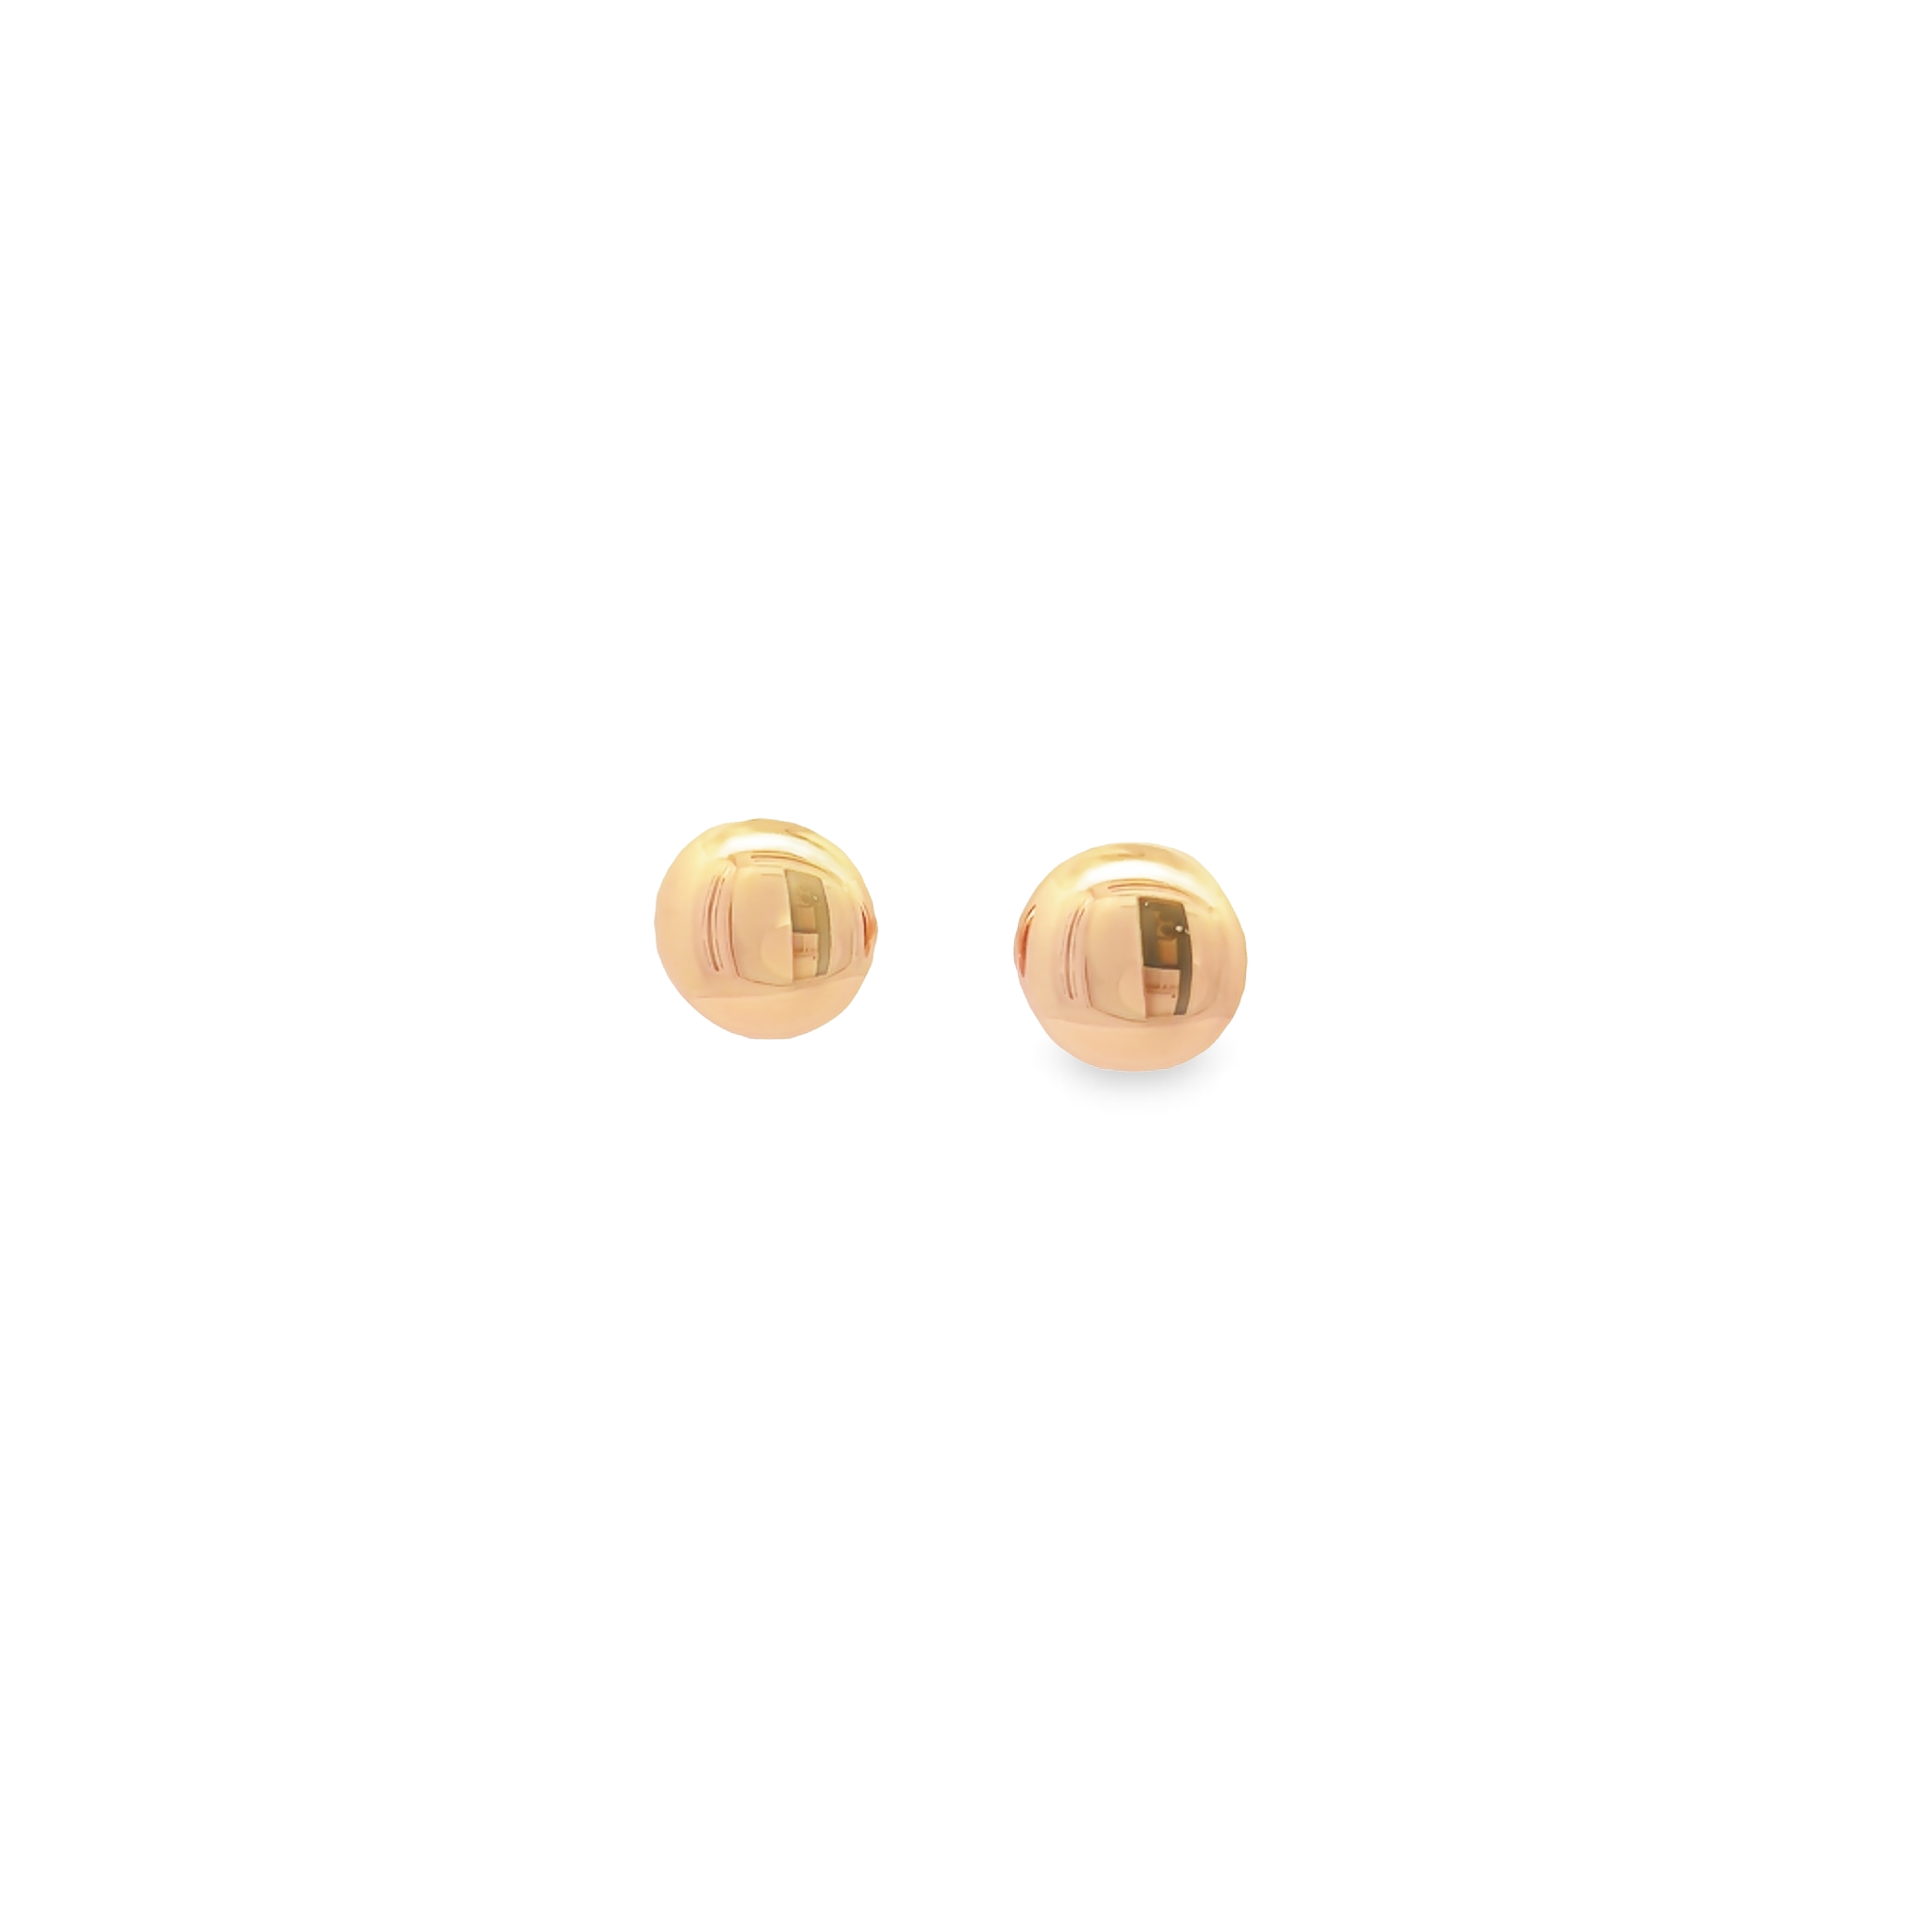 10mm 14k Rose Gold Button Stud Earrings